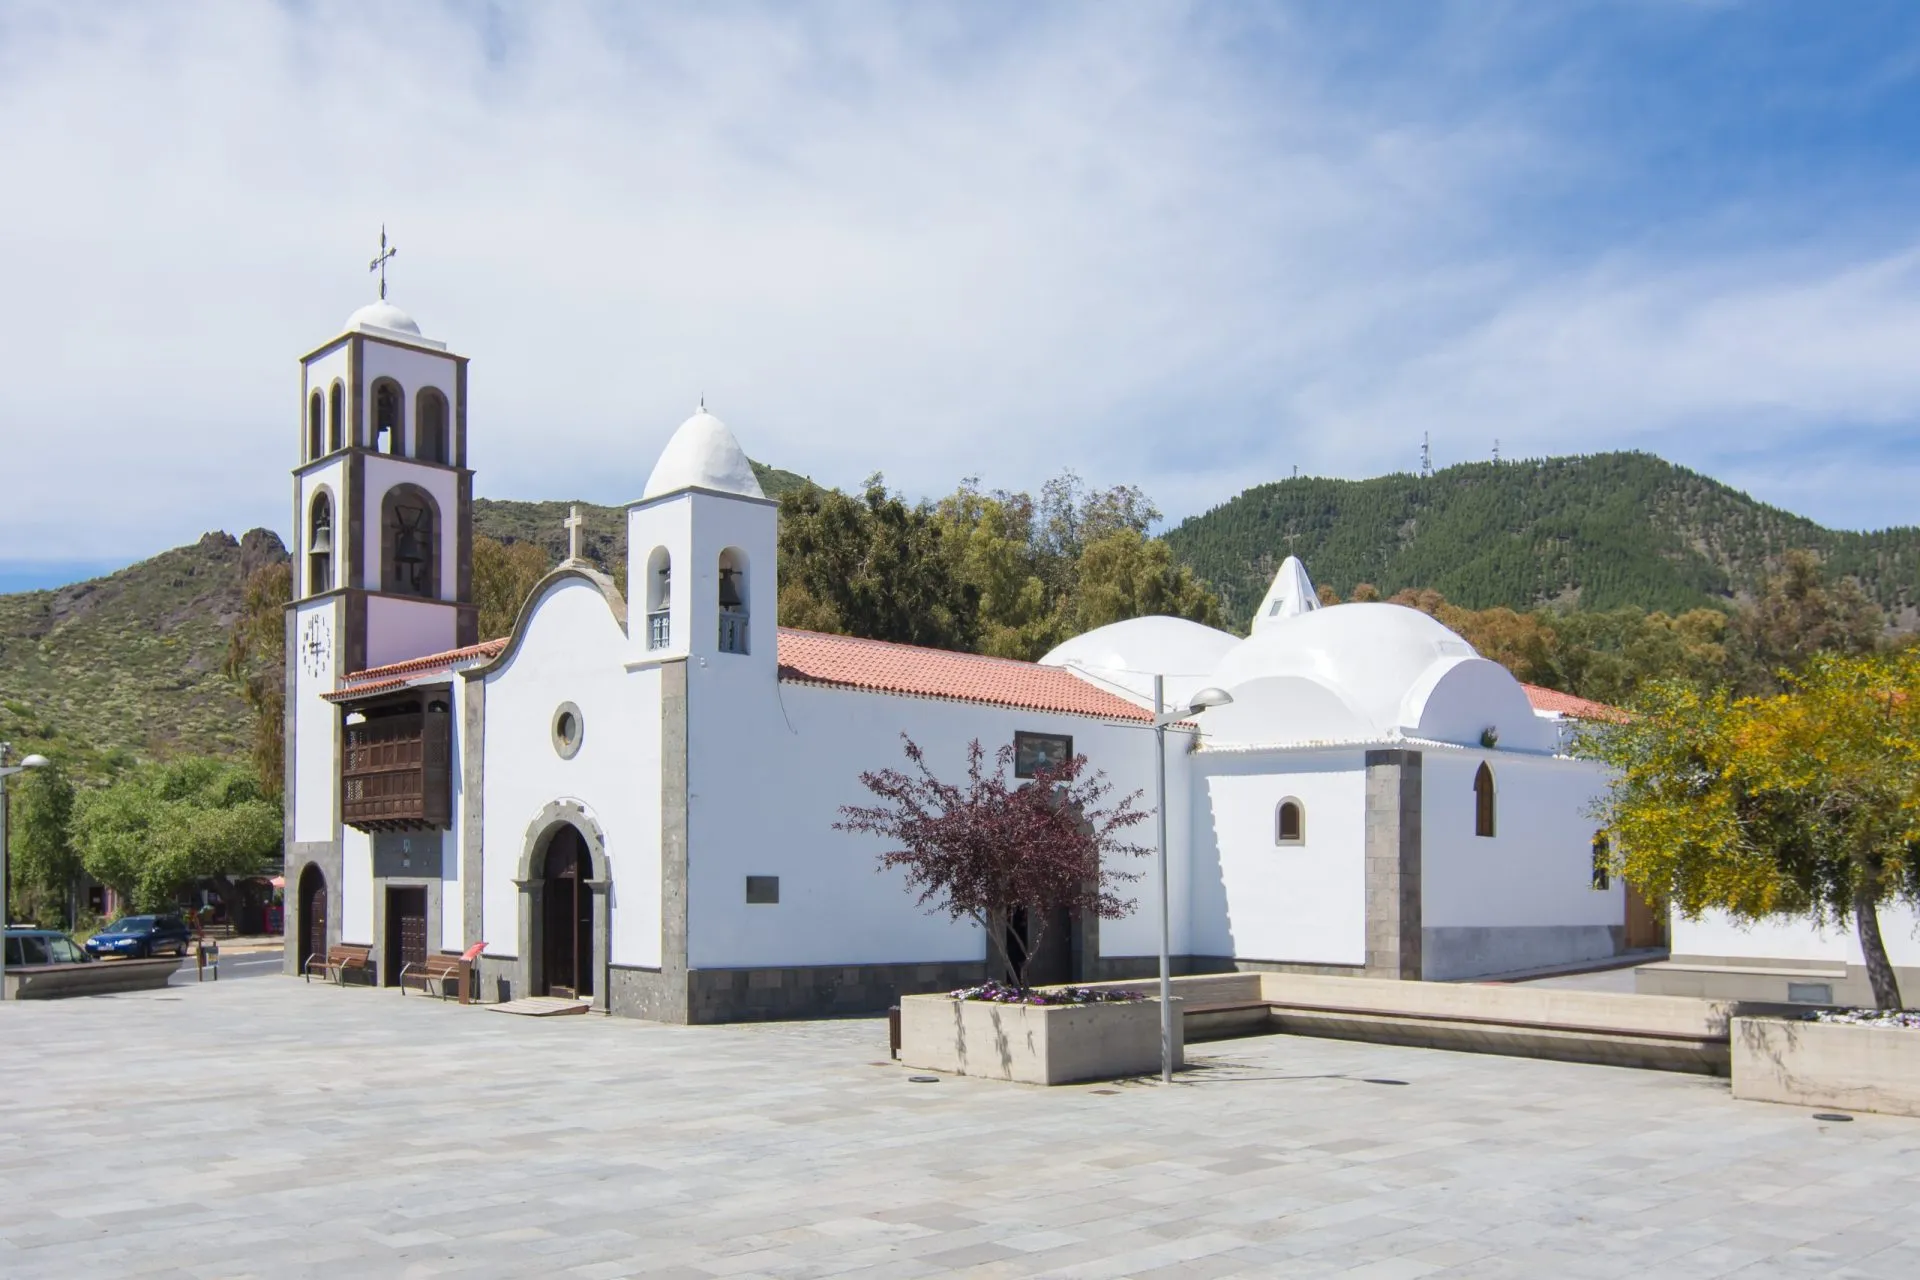 Iglesia (kirke) de San Fernando Rey i Santiago del Teide, Tenerife, De Kanariske Øer, Spanien